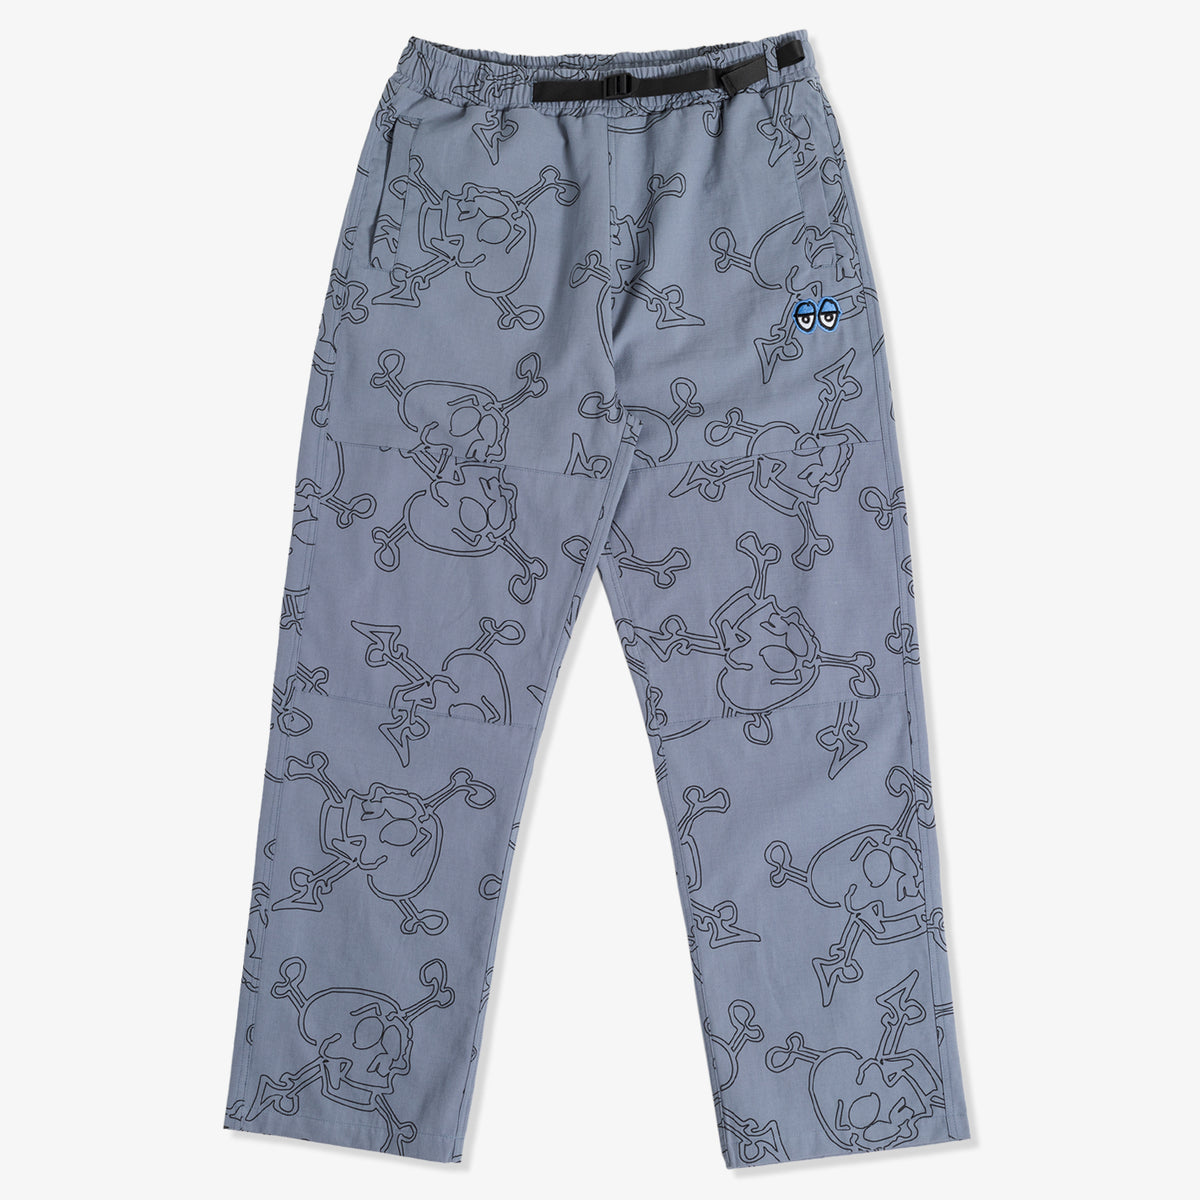 Krooked Style Pants (Grey)